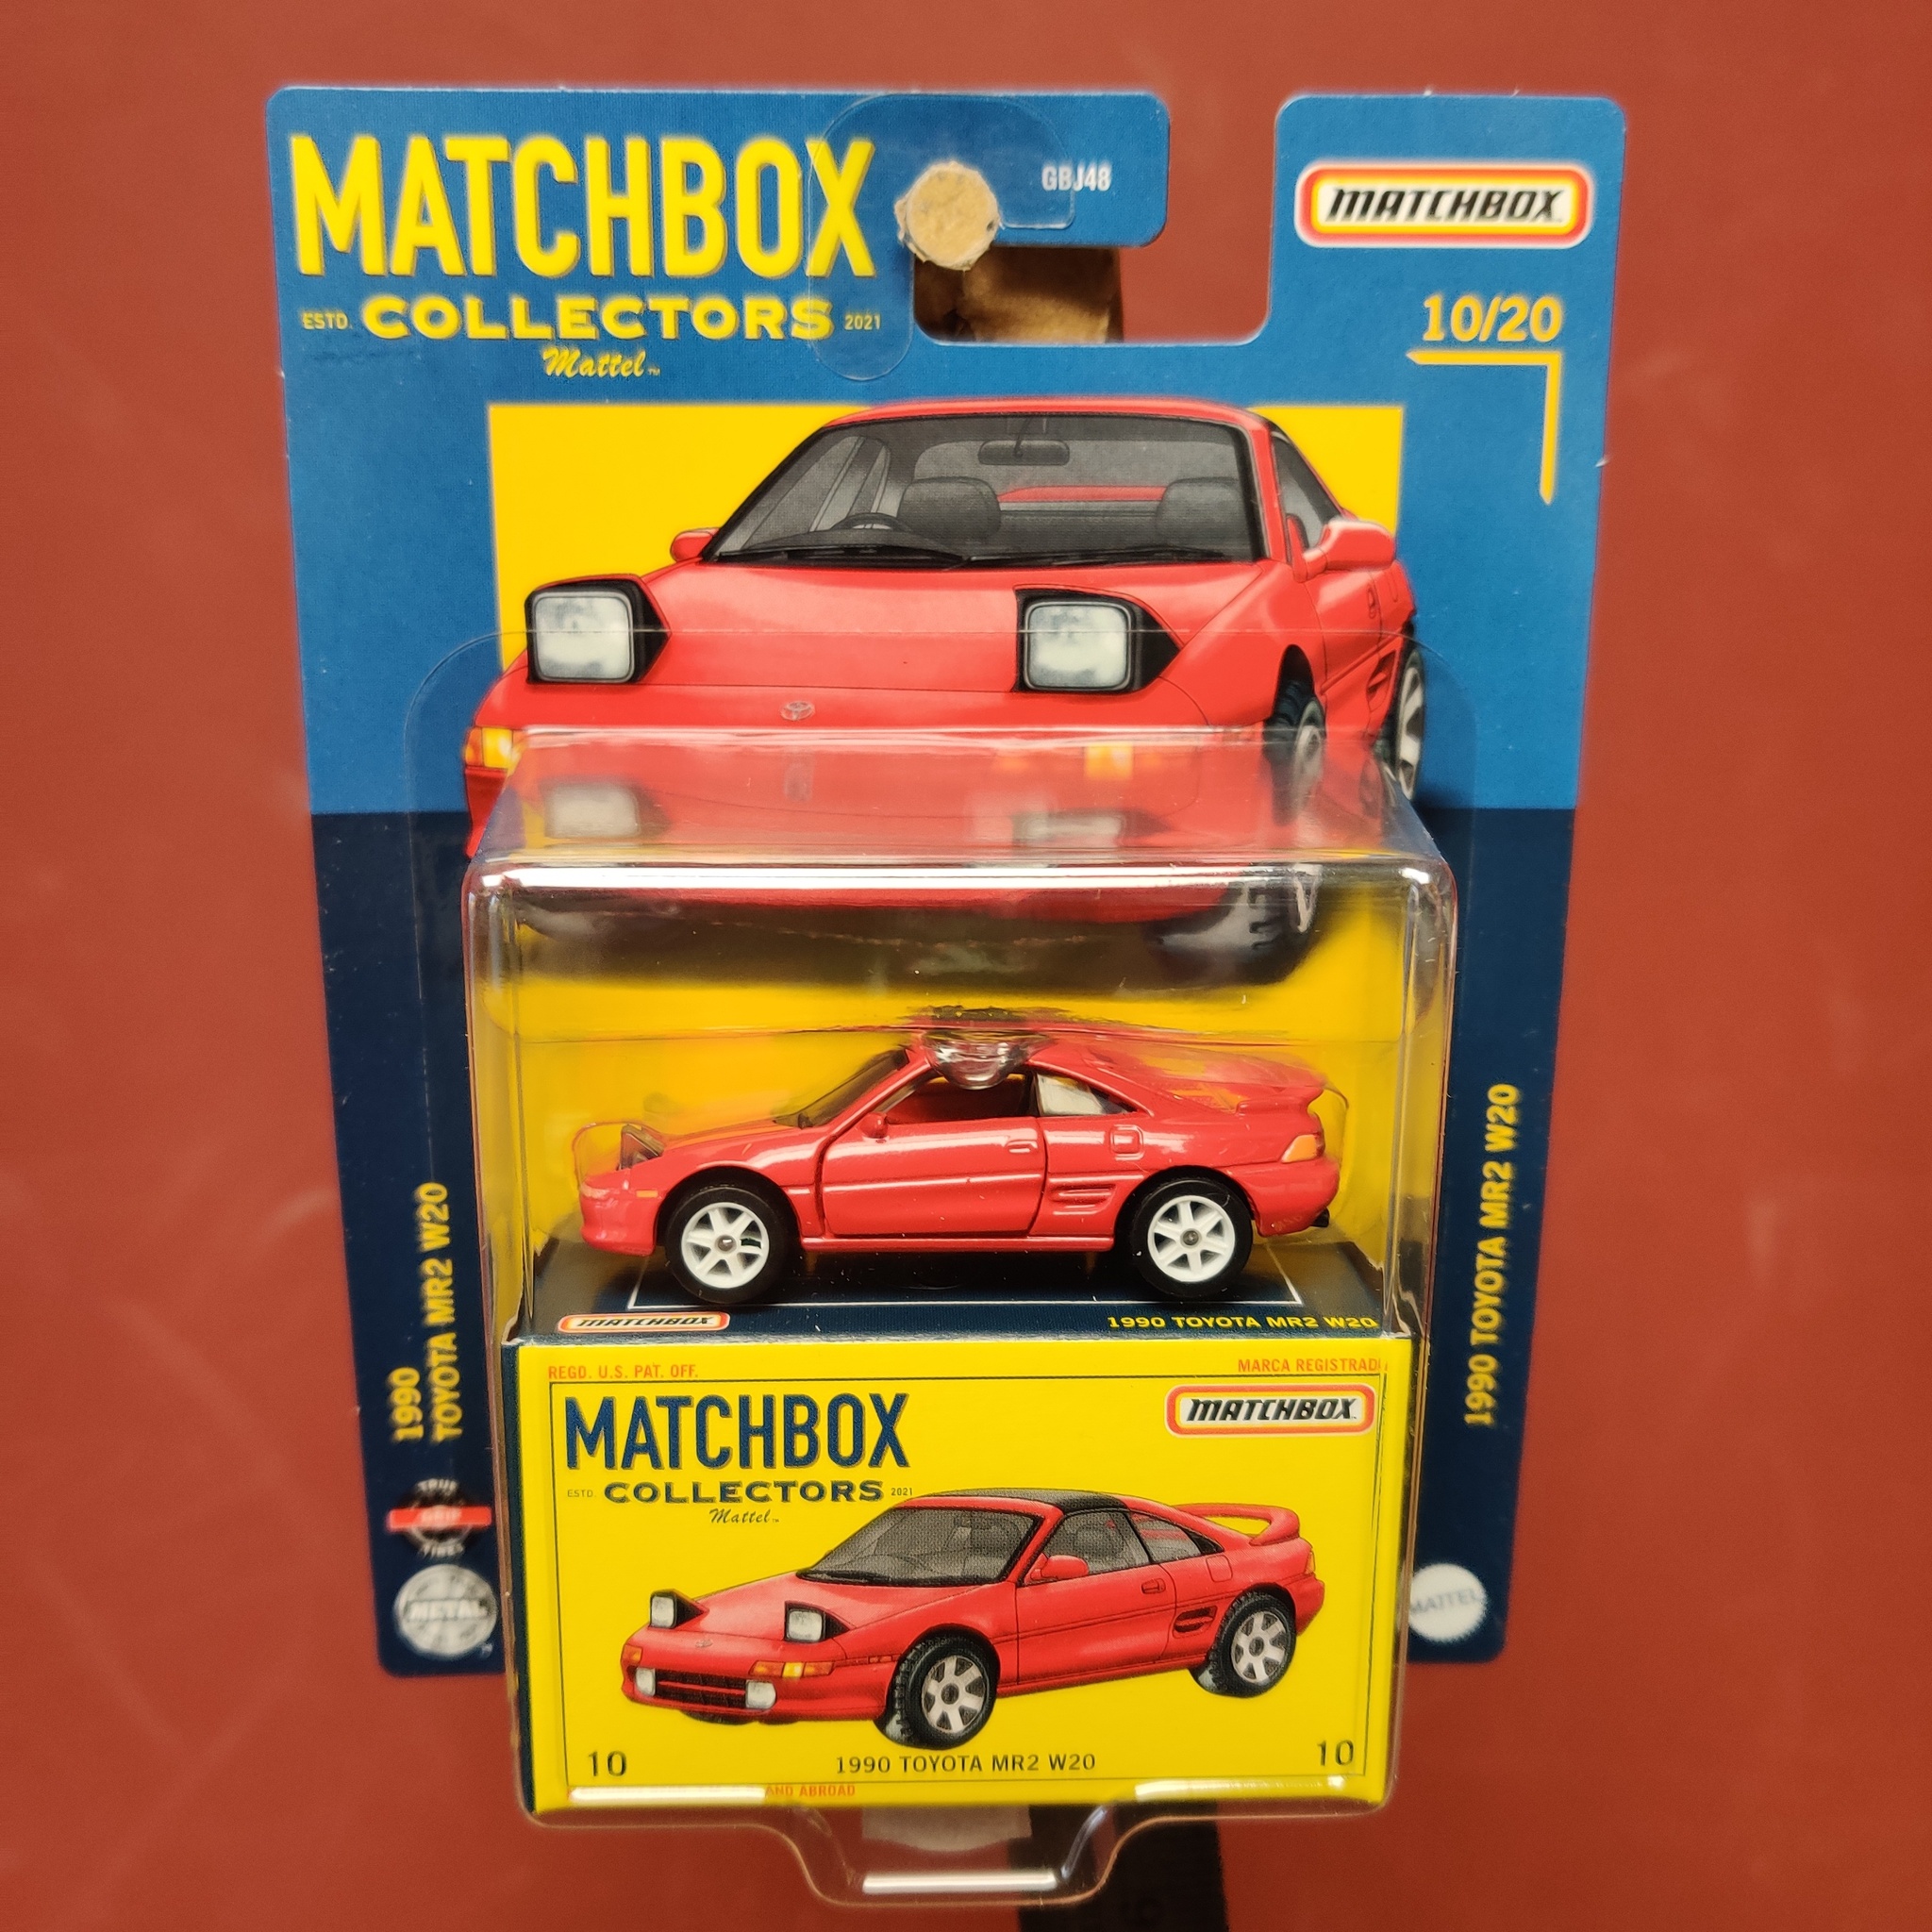 Skala 1/64 MATCHBOX - Collectors - Toyota MR2 W20 1990 Uppfällda lyktor